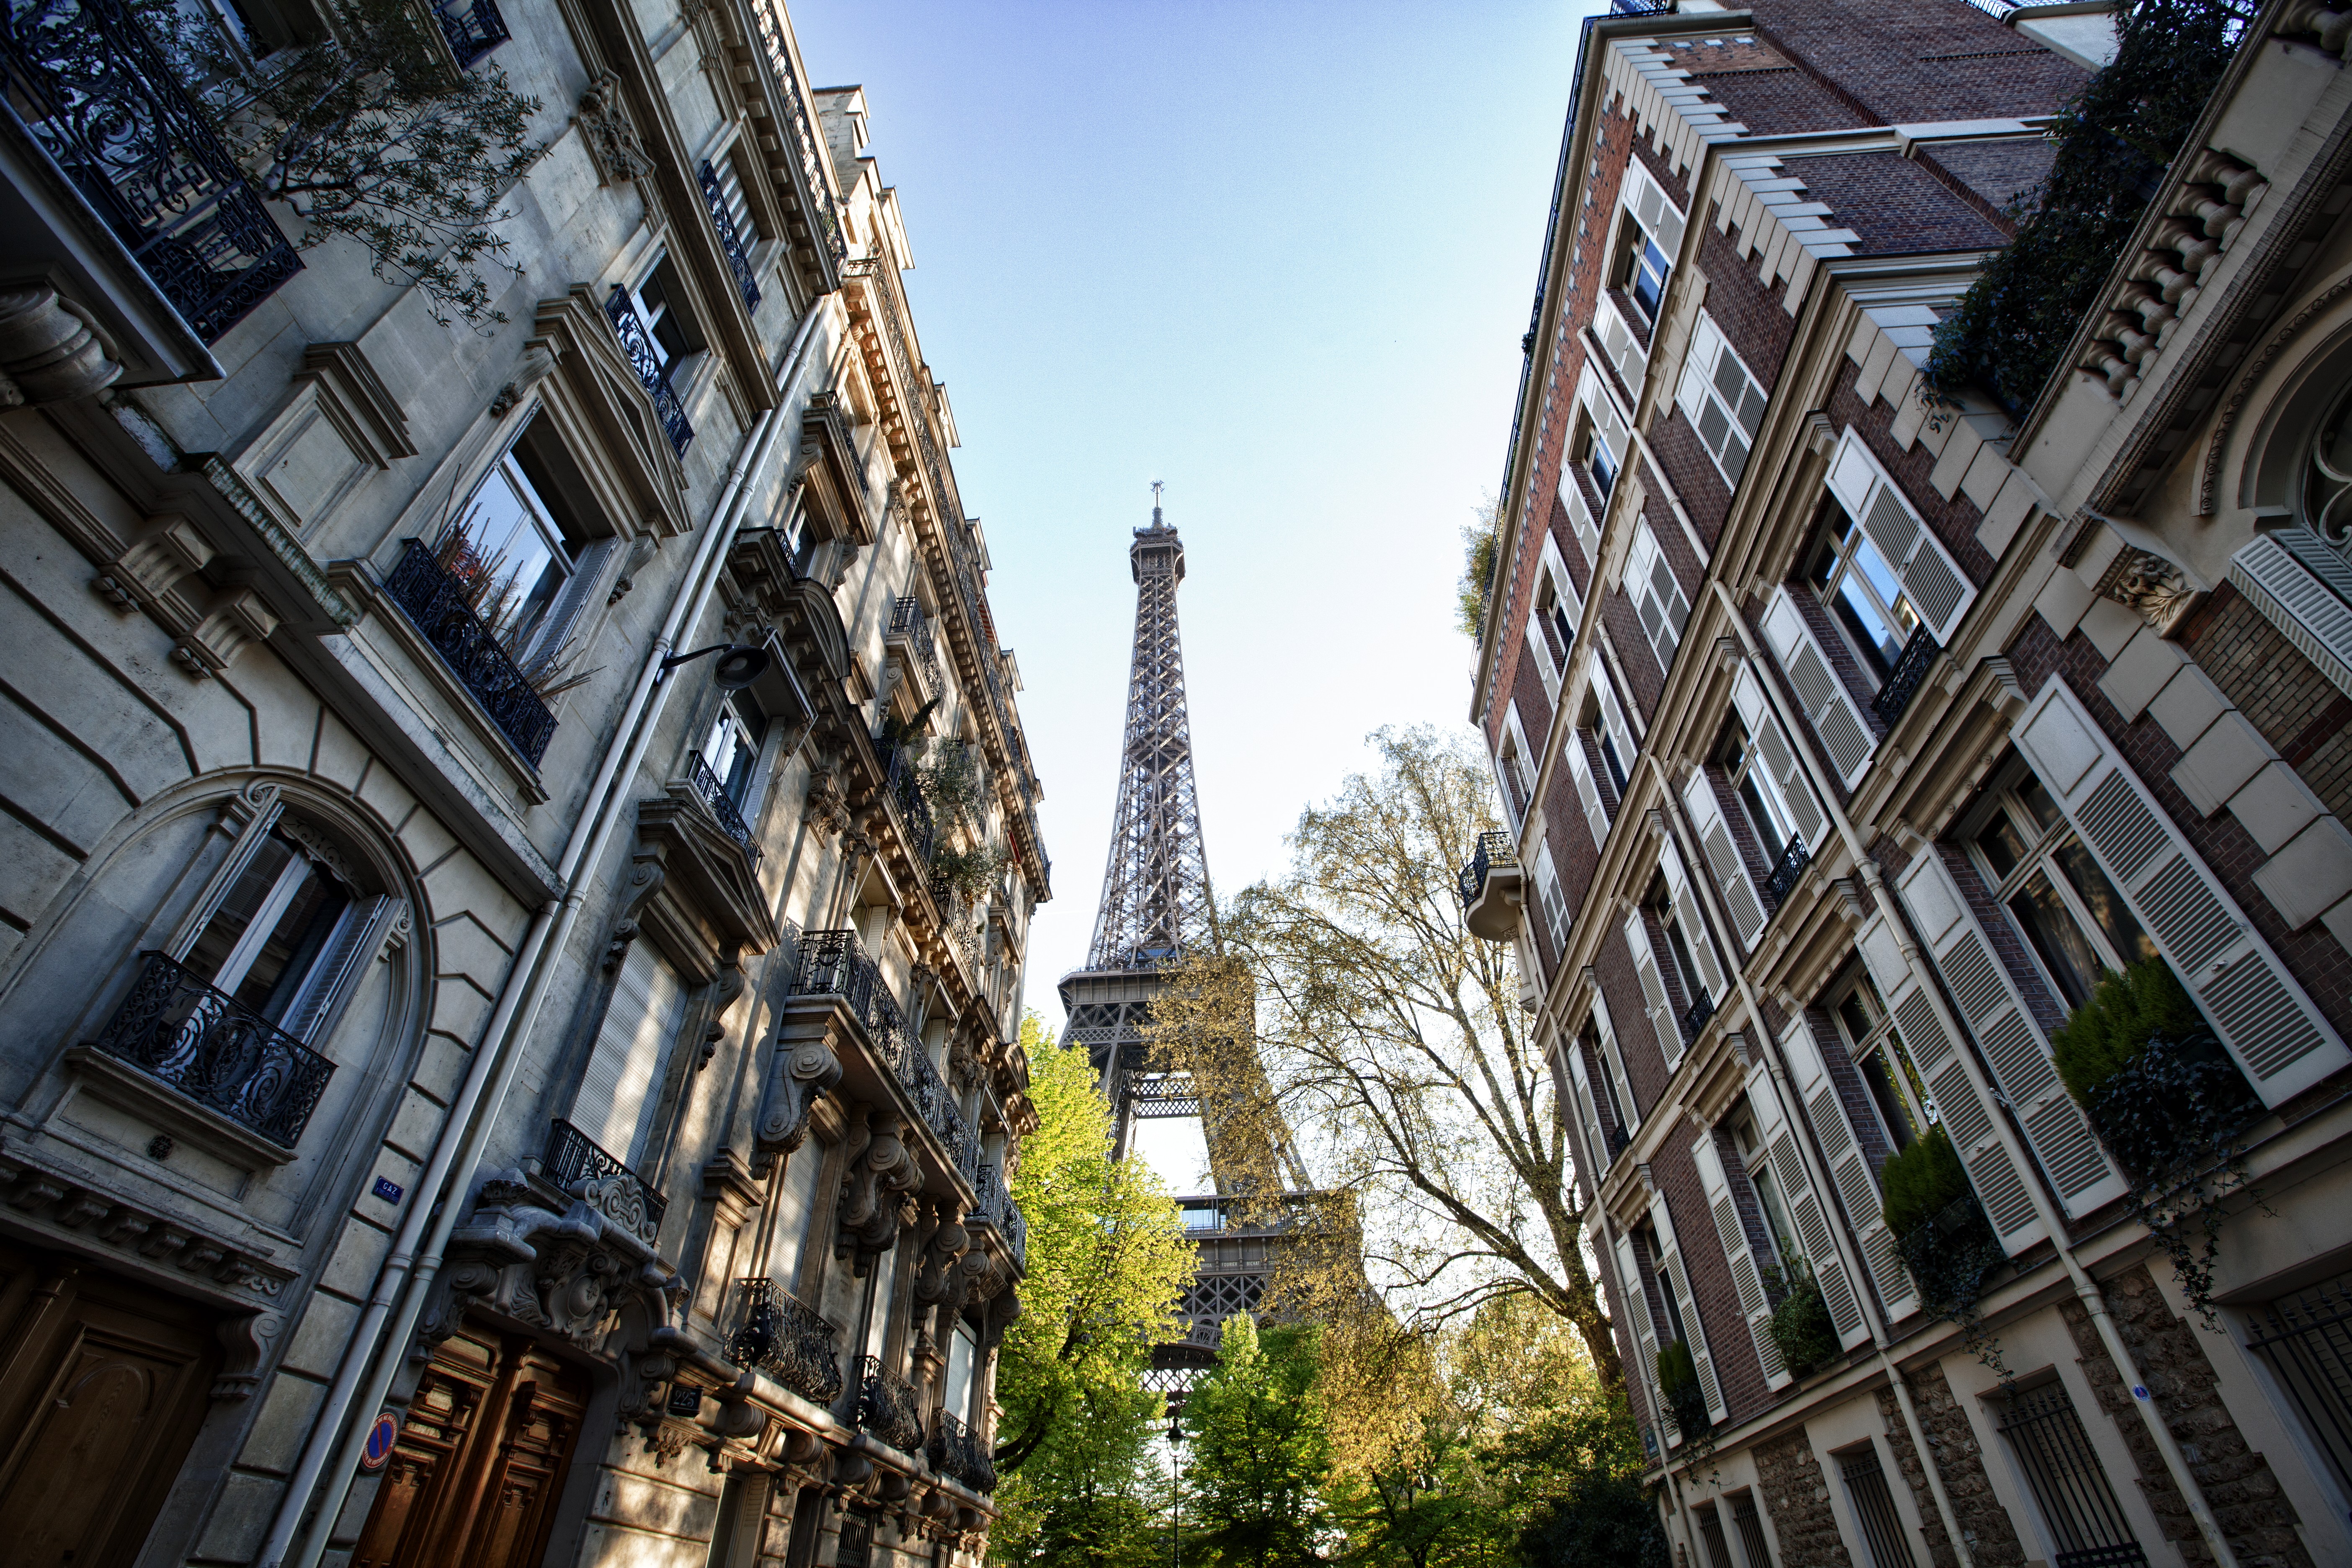 A Parisian neighborhood.